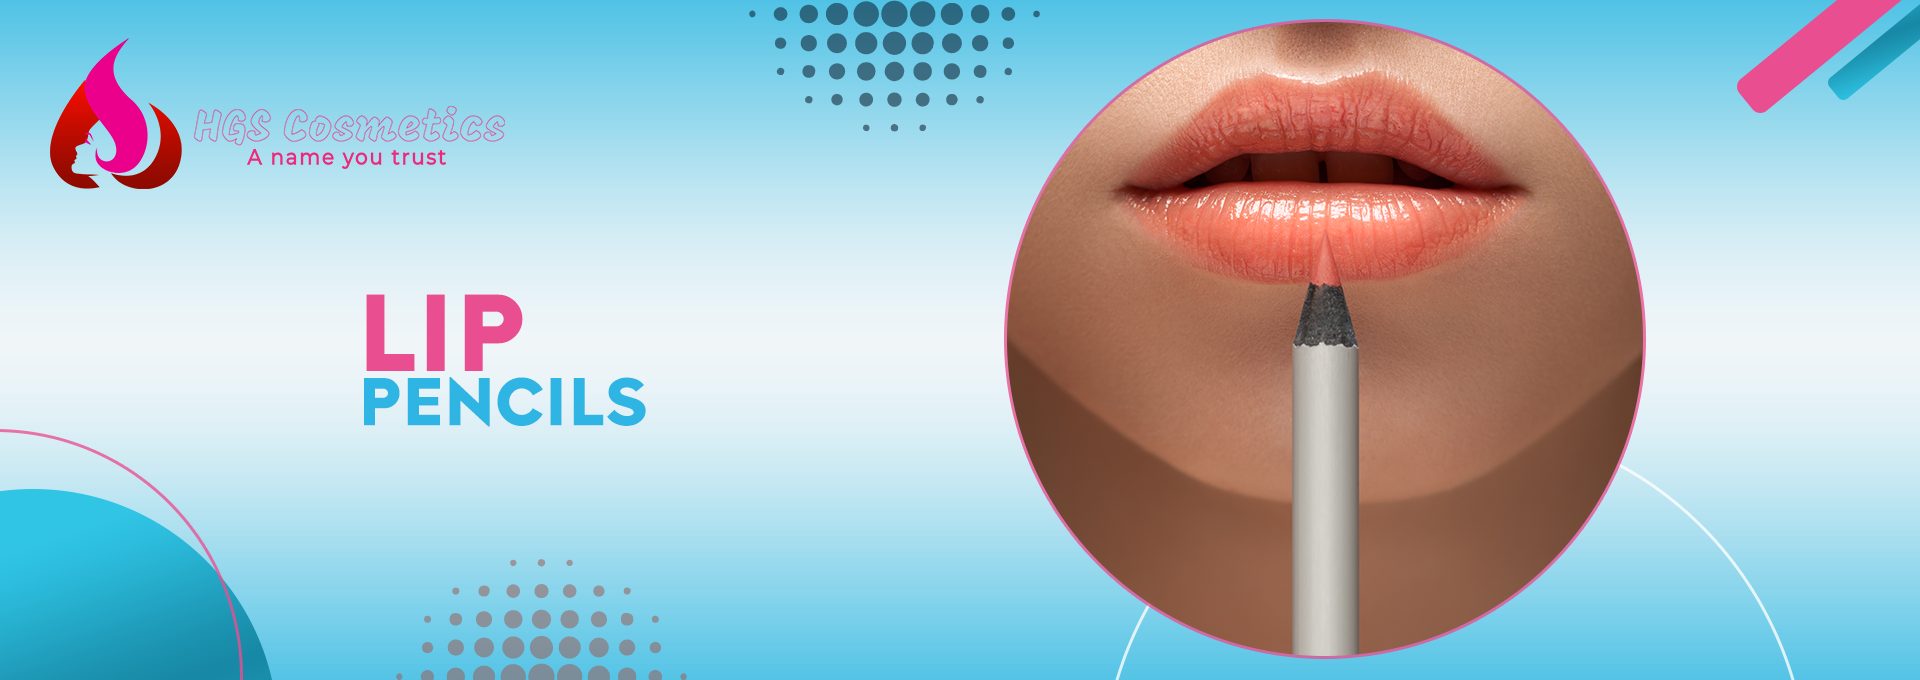 Shop Best Lip Pencils products Online @ HGS Cosmetics